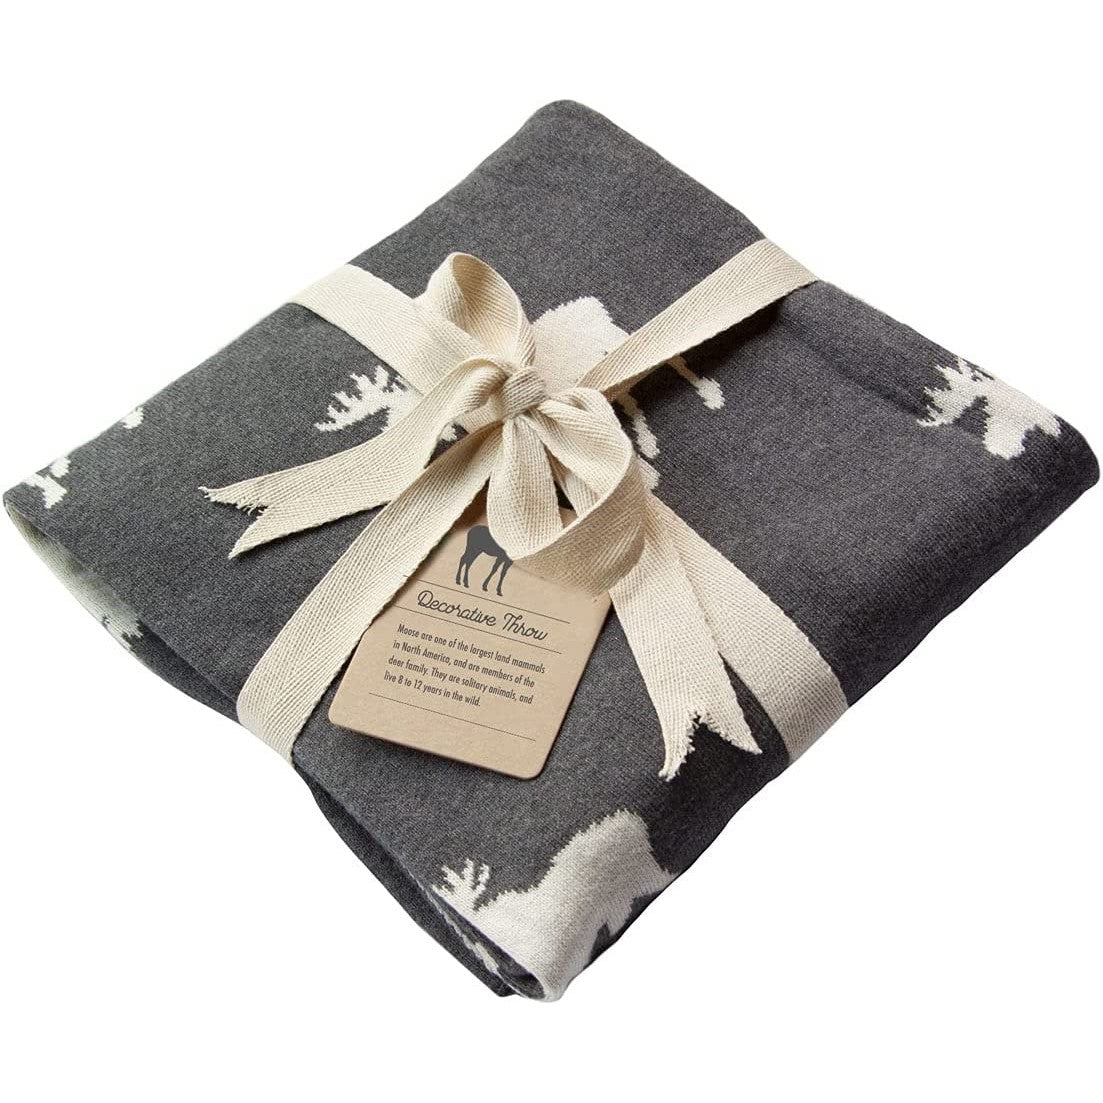 Moose Slub Yarn Grey and Cream Blanket - Large